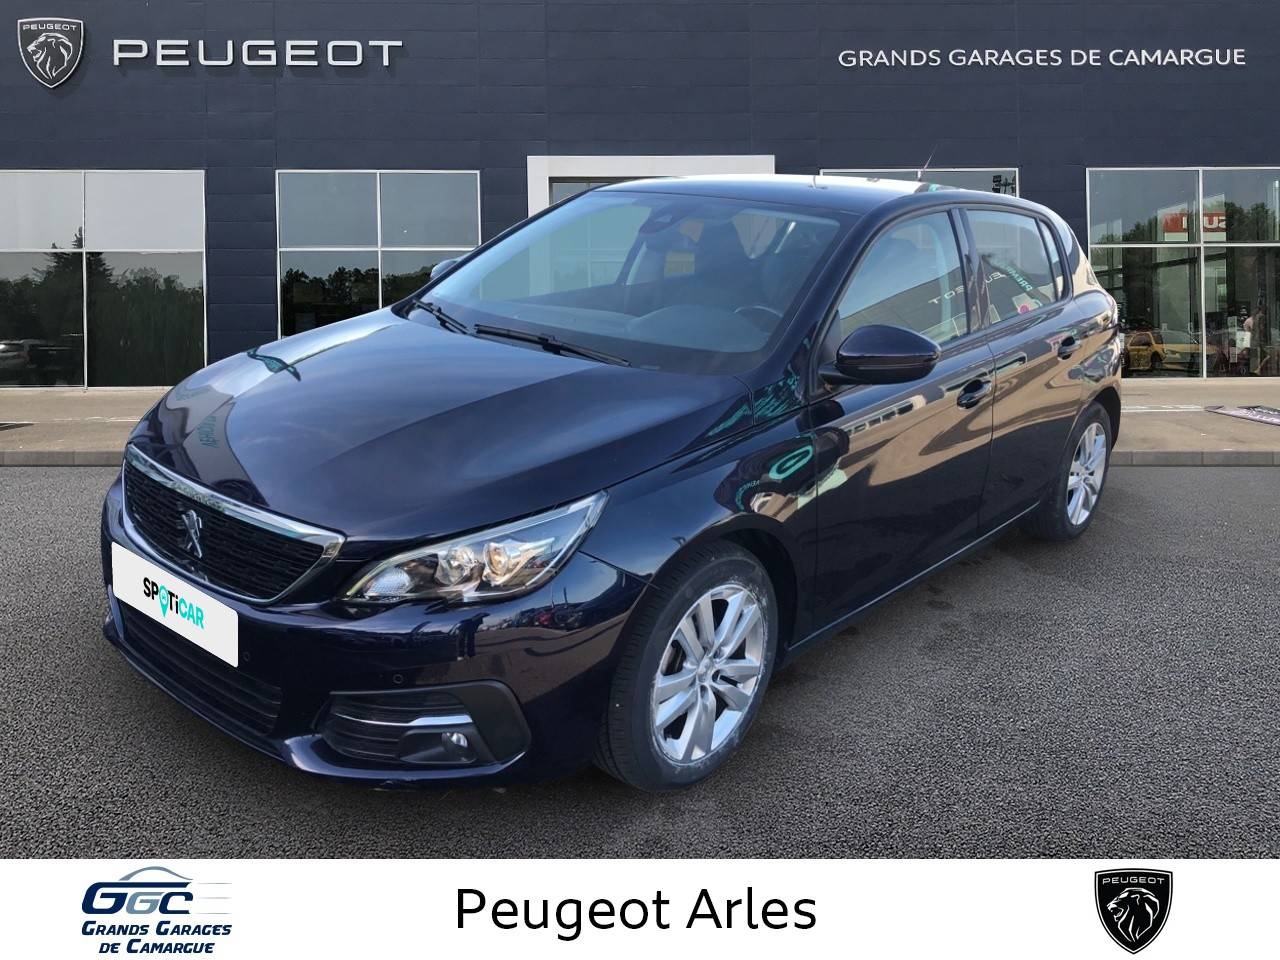 PEUGEOT 308 | 308 BlueHDi 130ch S&S EAT8 occasion - Peugeot Arles